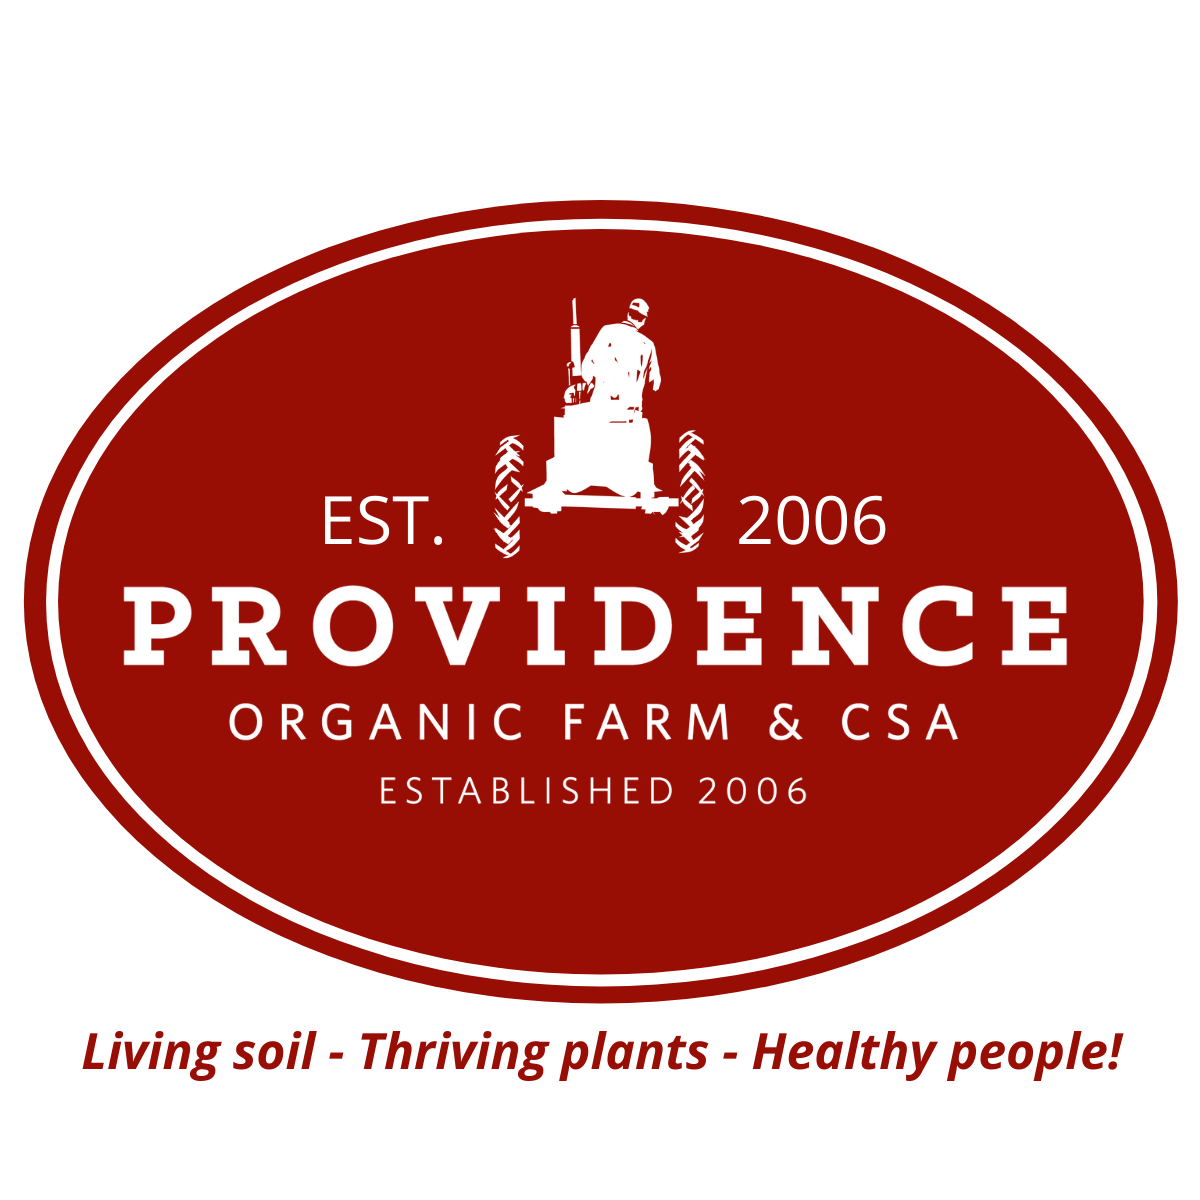 Providence Organic Farm